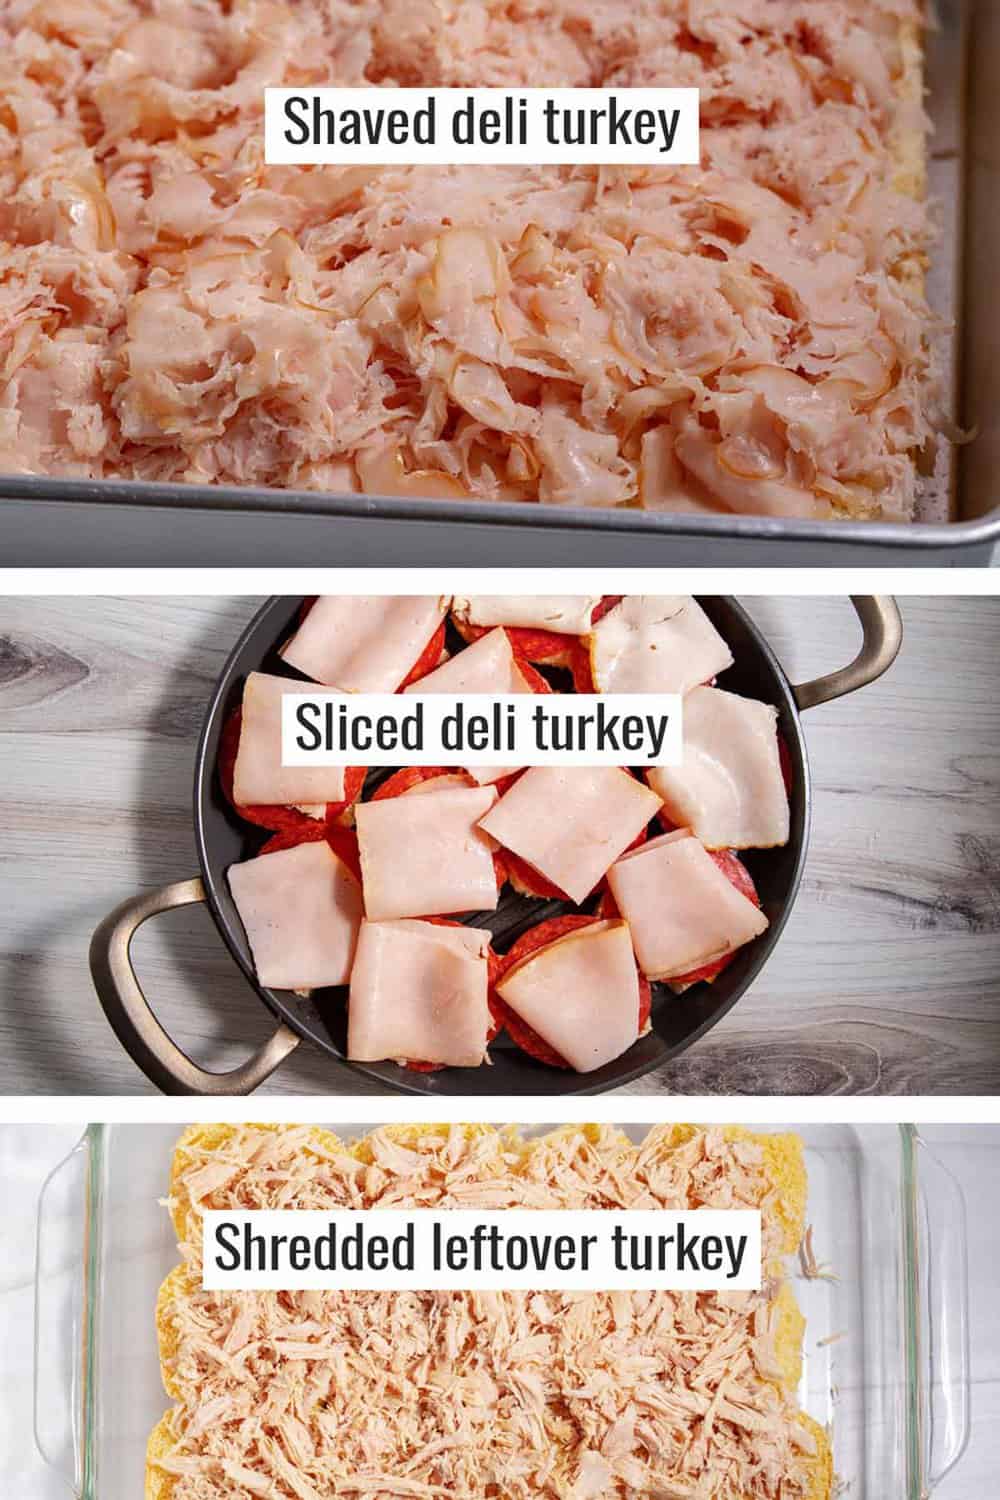 shaved deli turkey, sliced deli turkey, and shredded leftover turkey